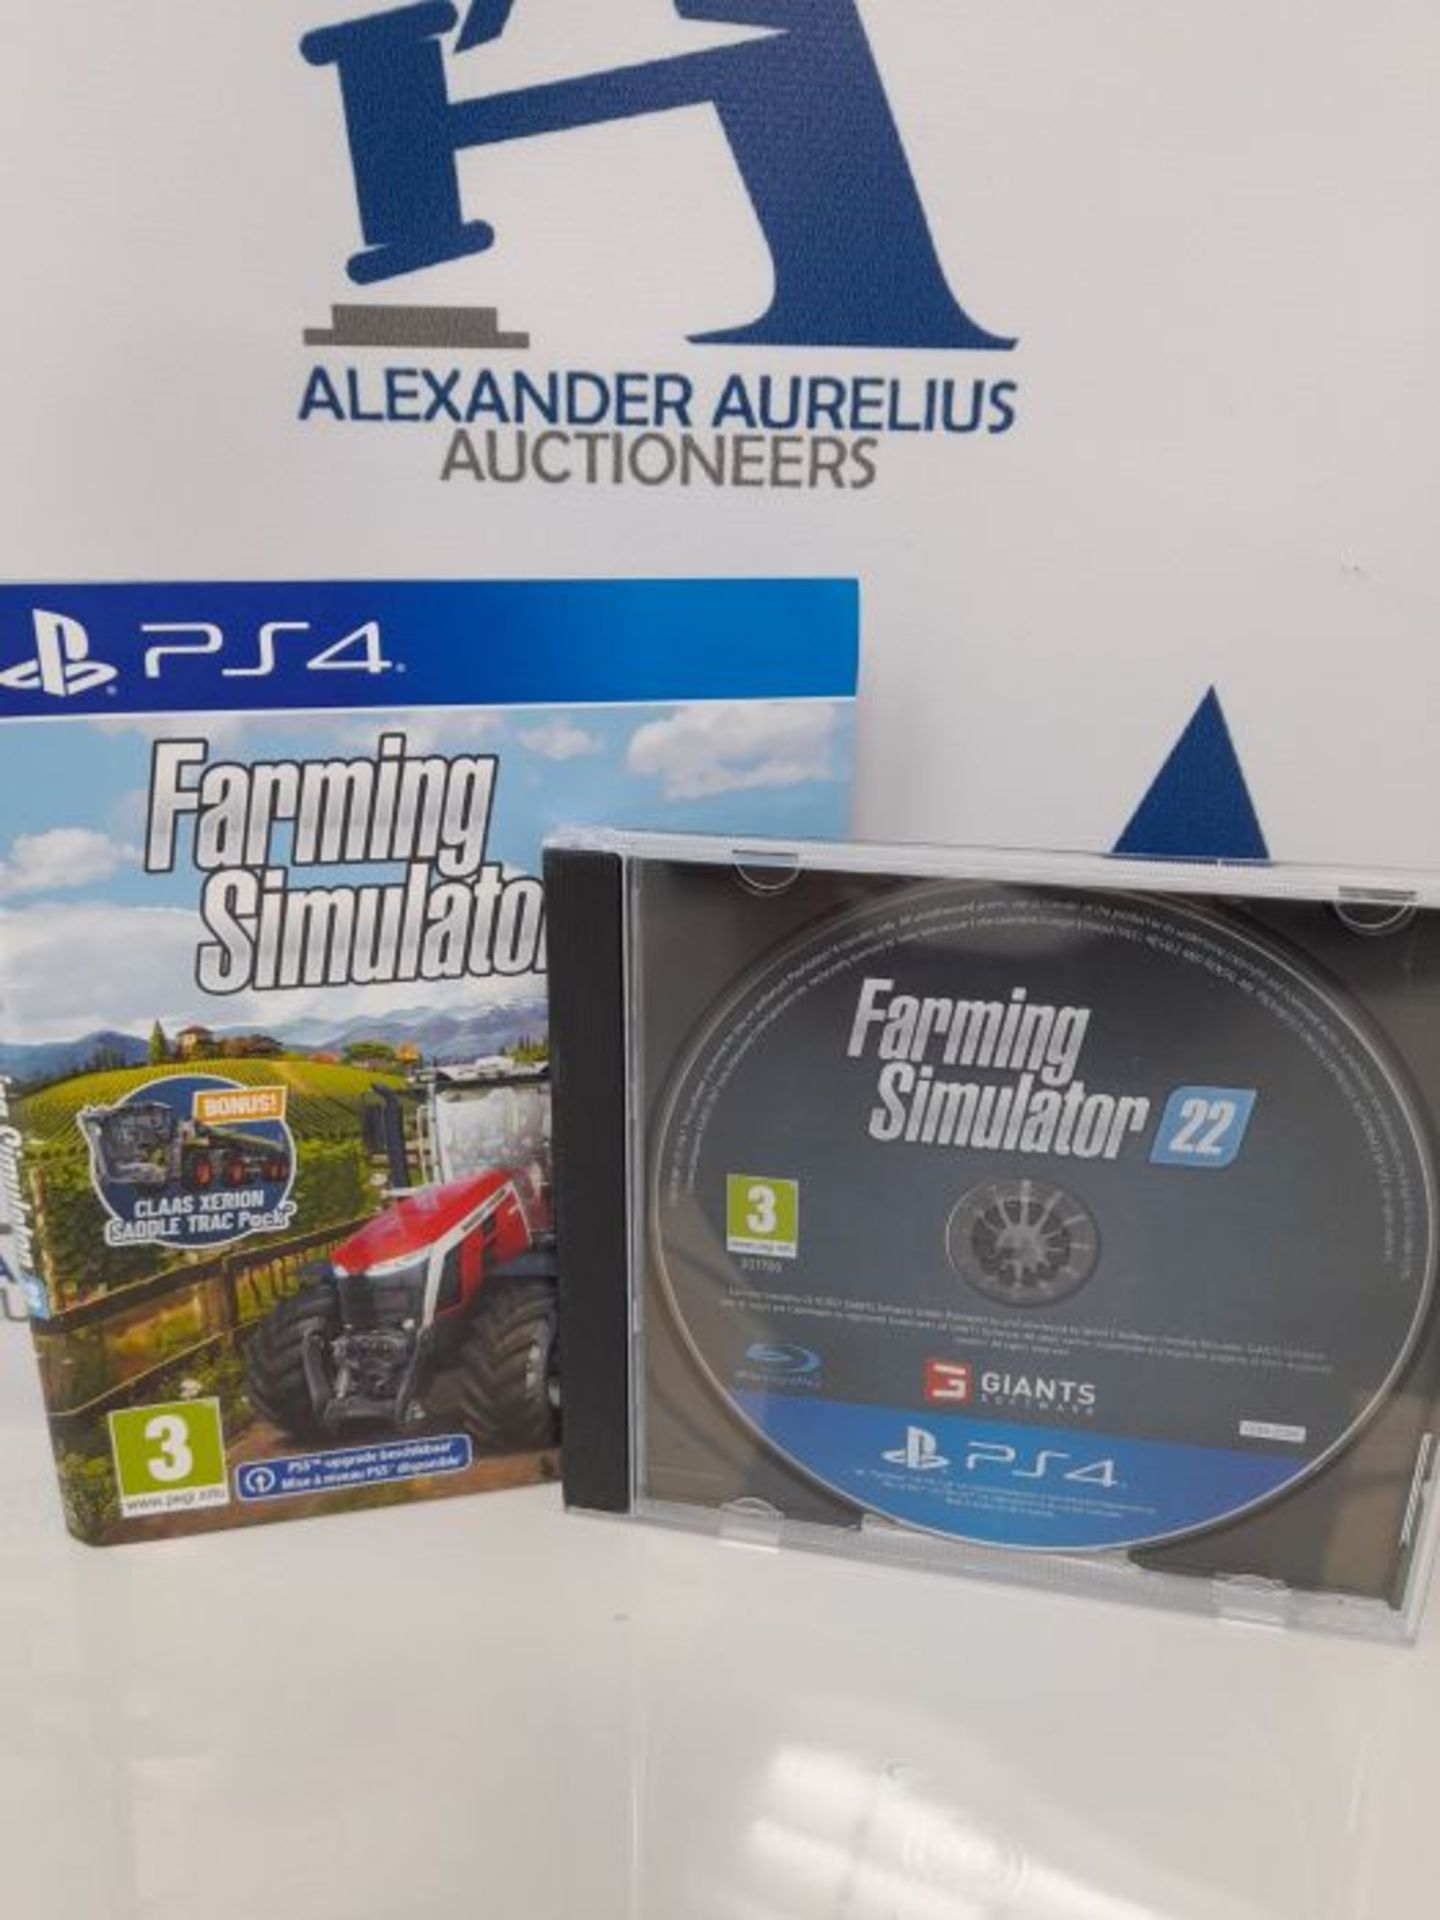 Farming Simulator 22 (Playstation 4) - Image 2 of 3